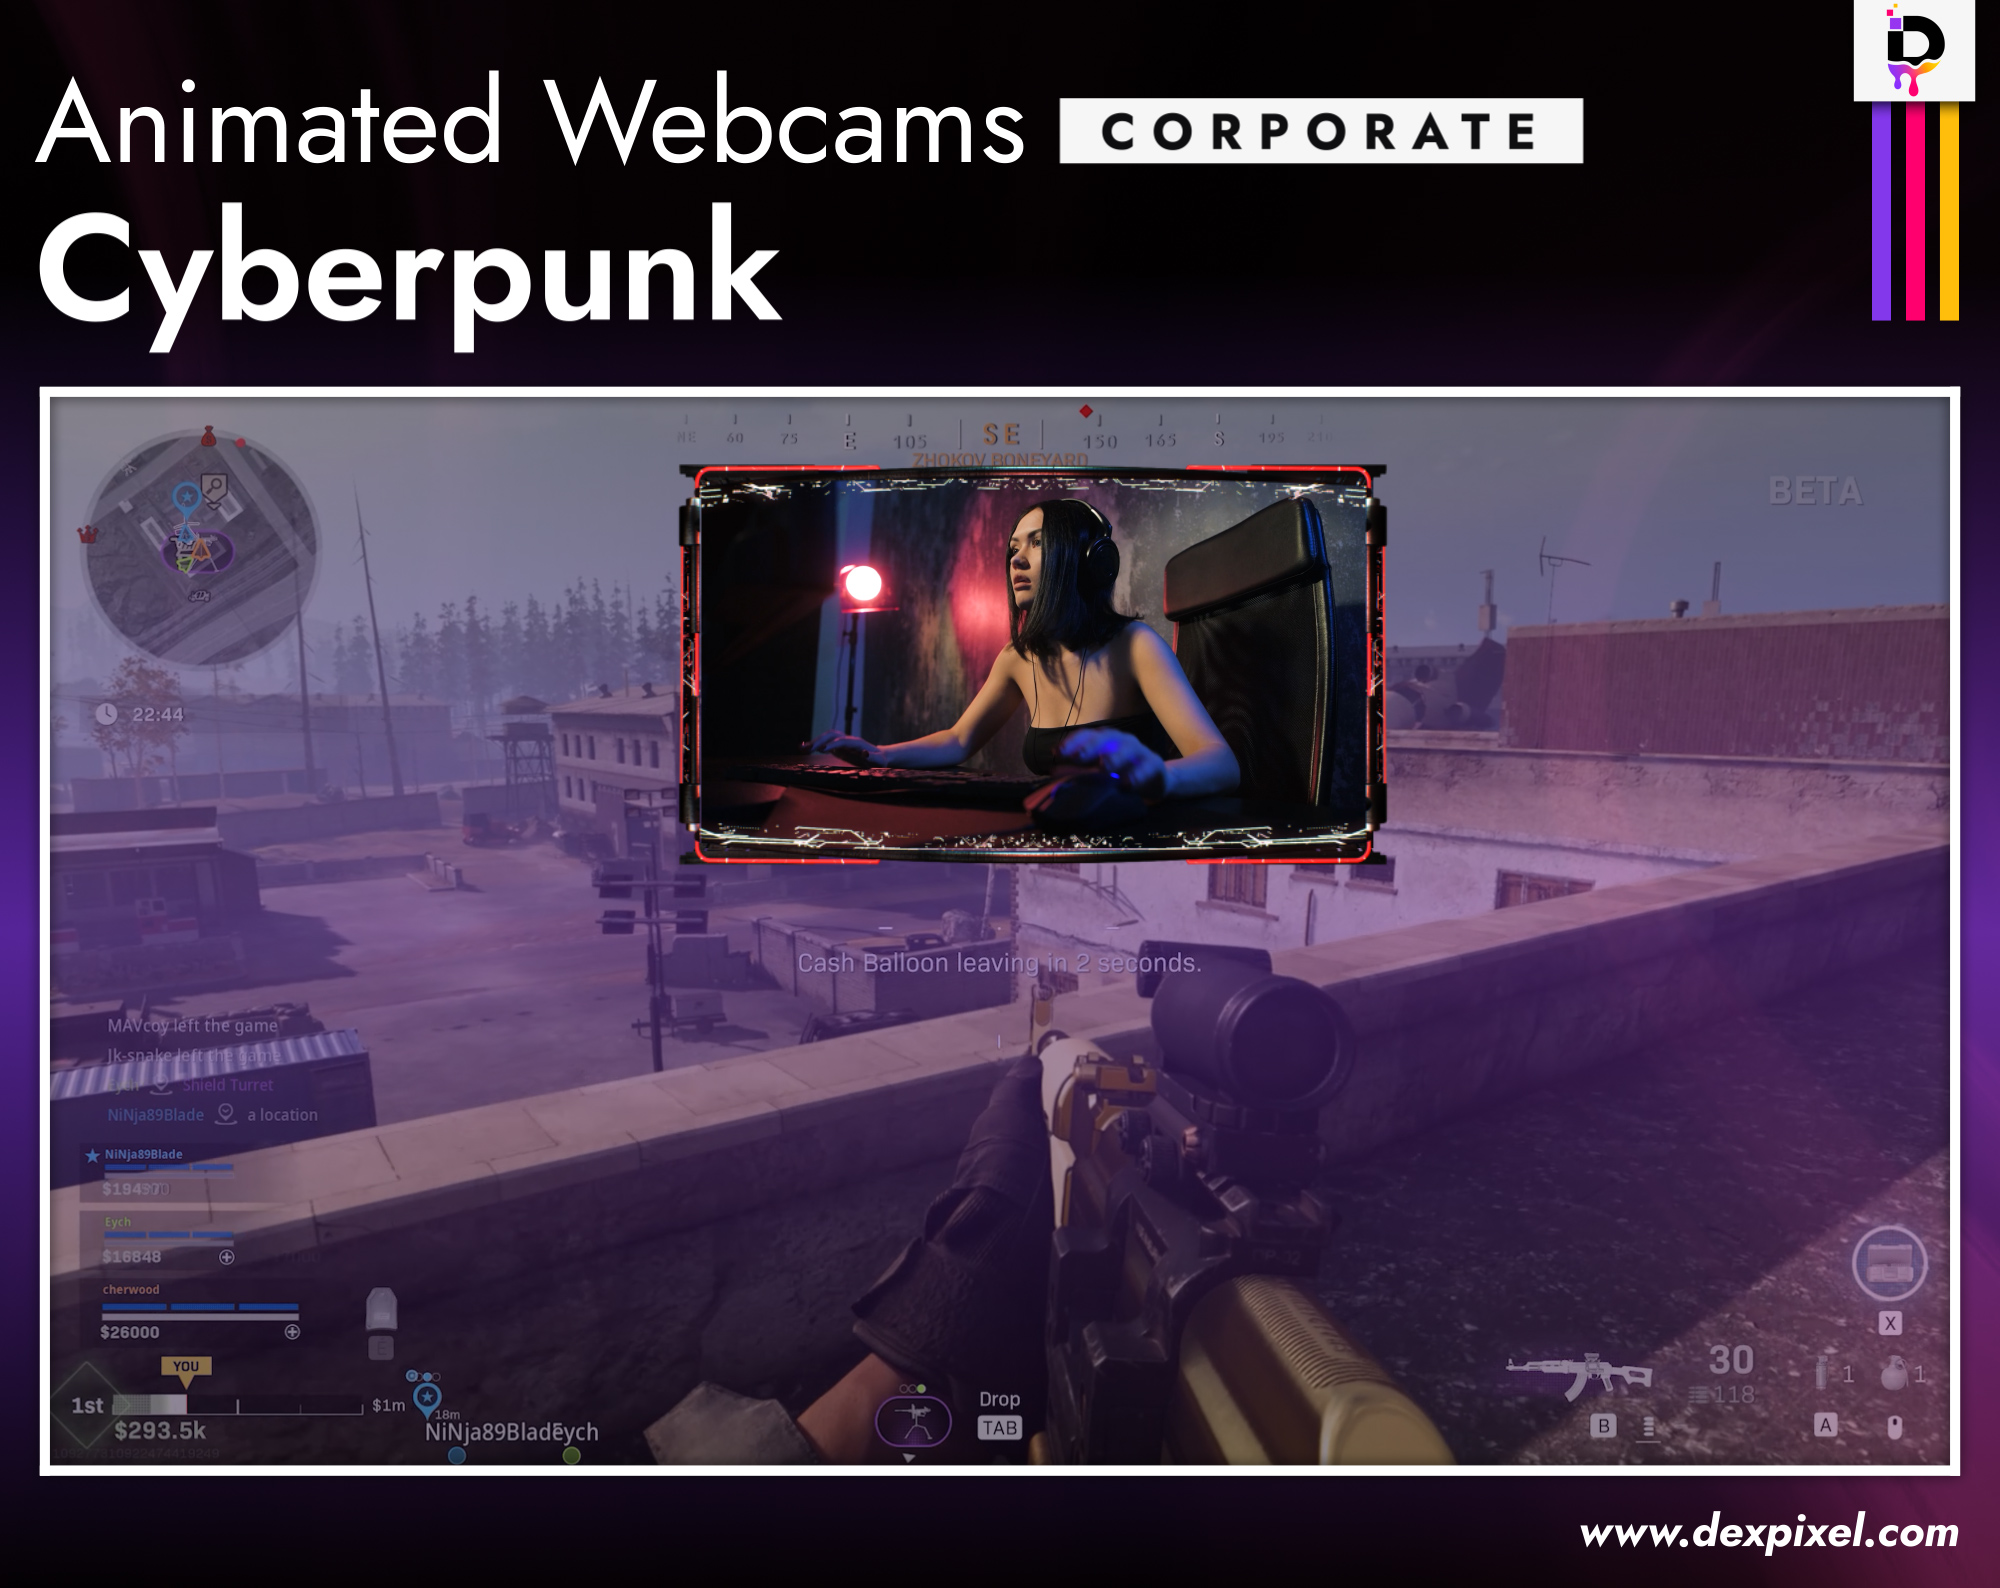 Animated Webcams Dexpixel Cyberpunk Corporate